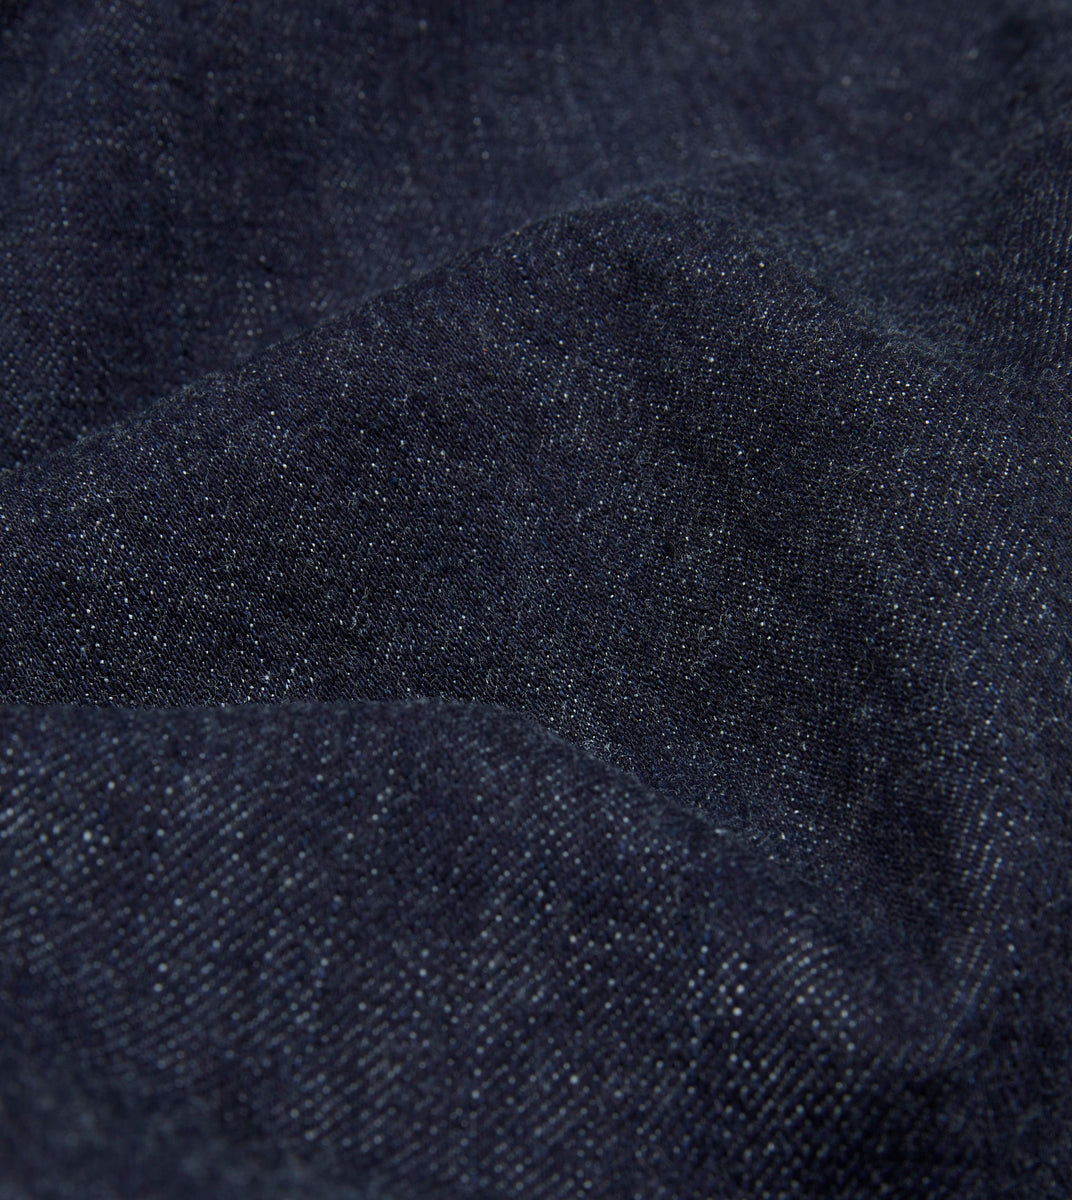 Jeans Drakes Indigo Japanese – Selvedge Rinse Five-Pocket Denim 14.2oz